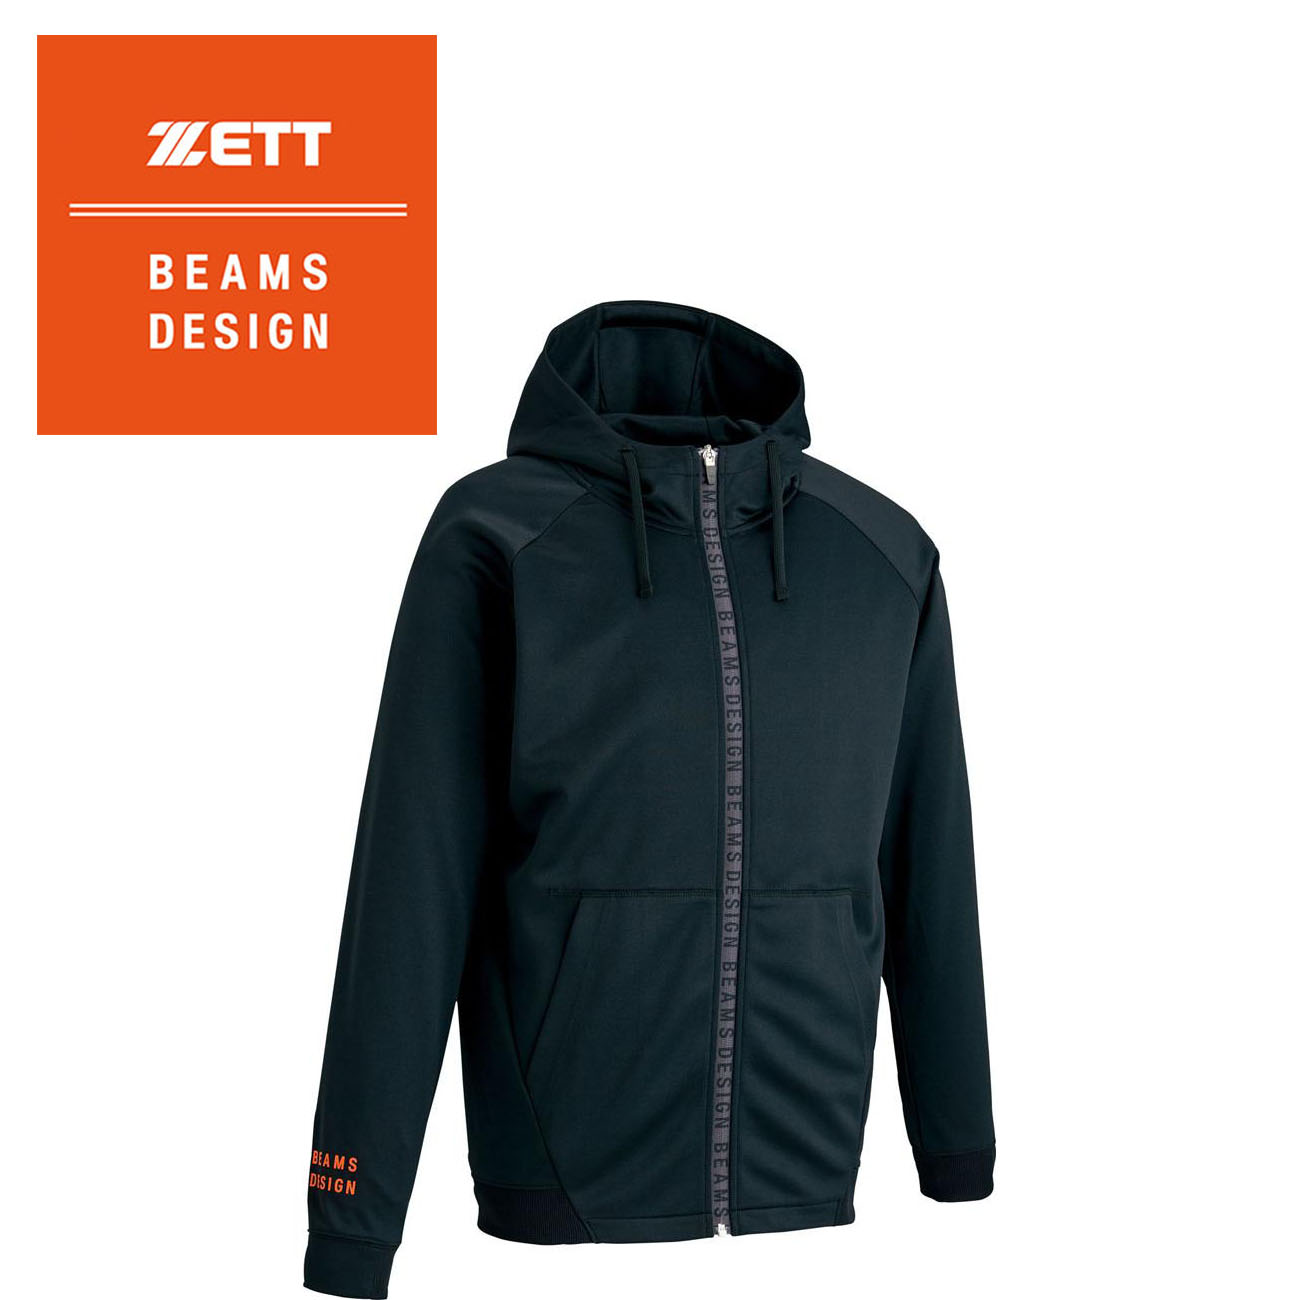 ZETT BEAMS DESIGN プロデュース スカウトジャケット | 総合スポーツ 